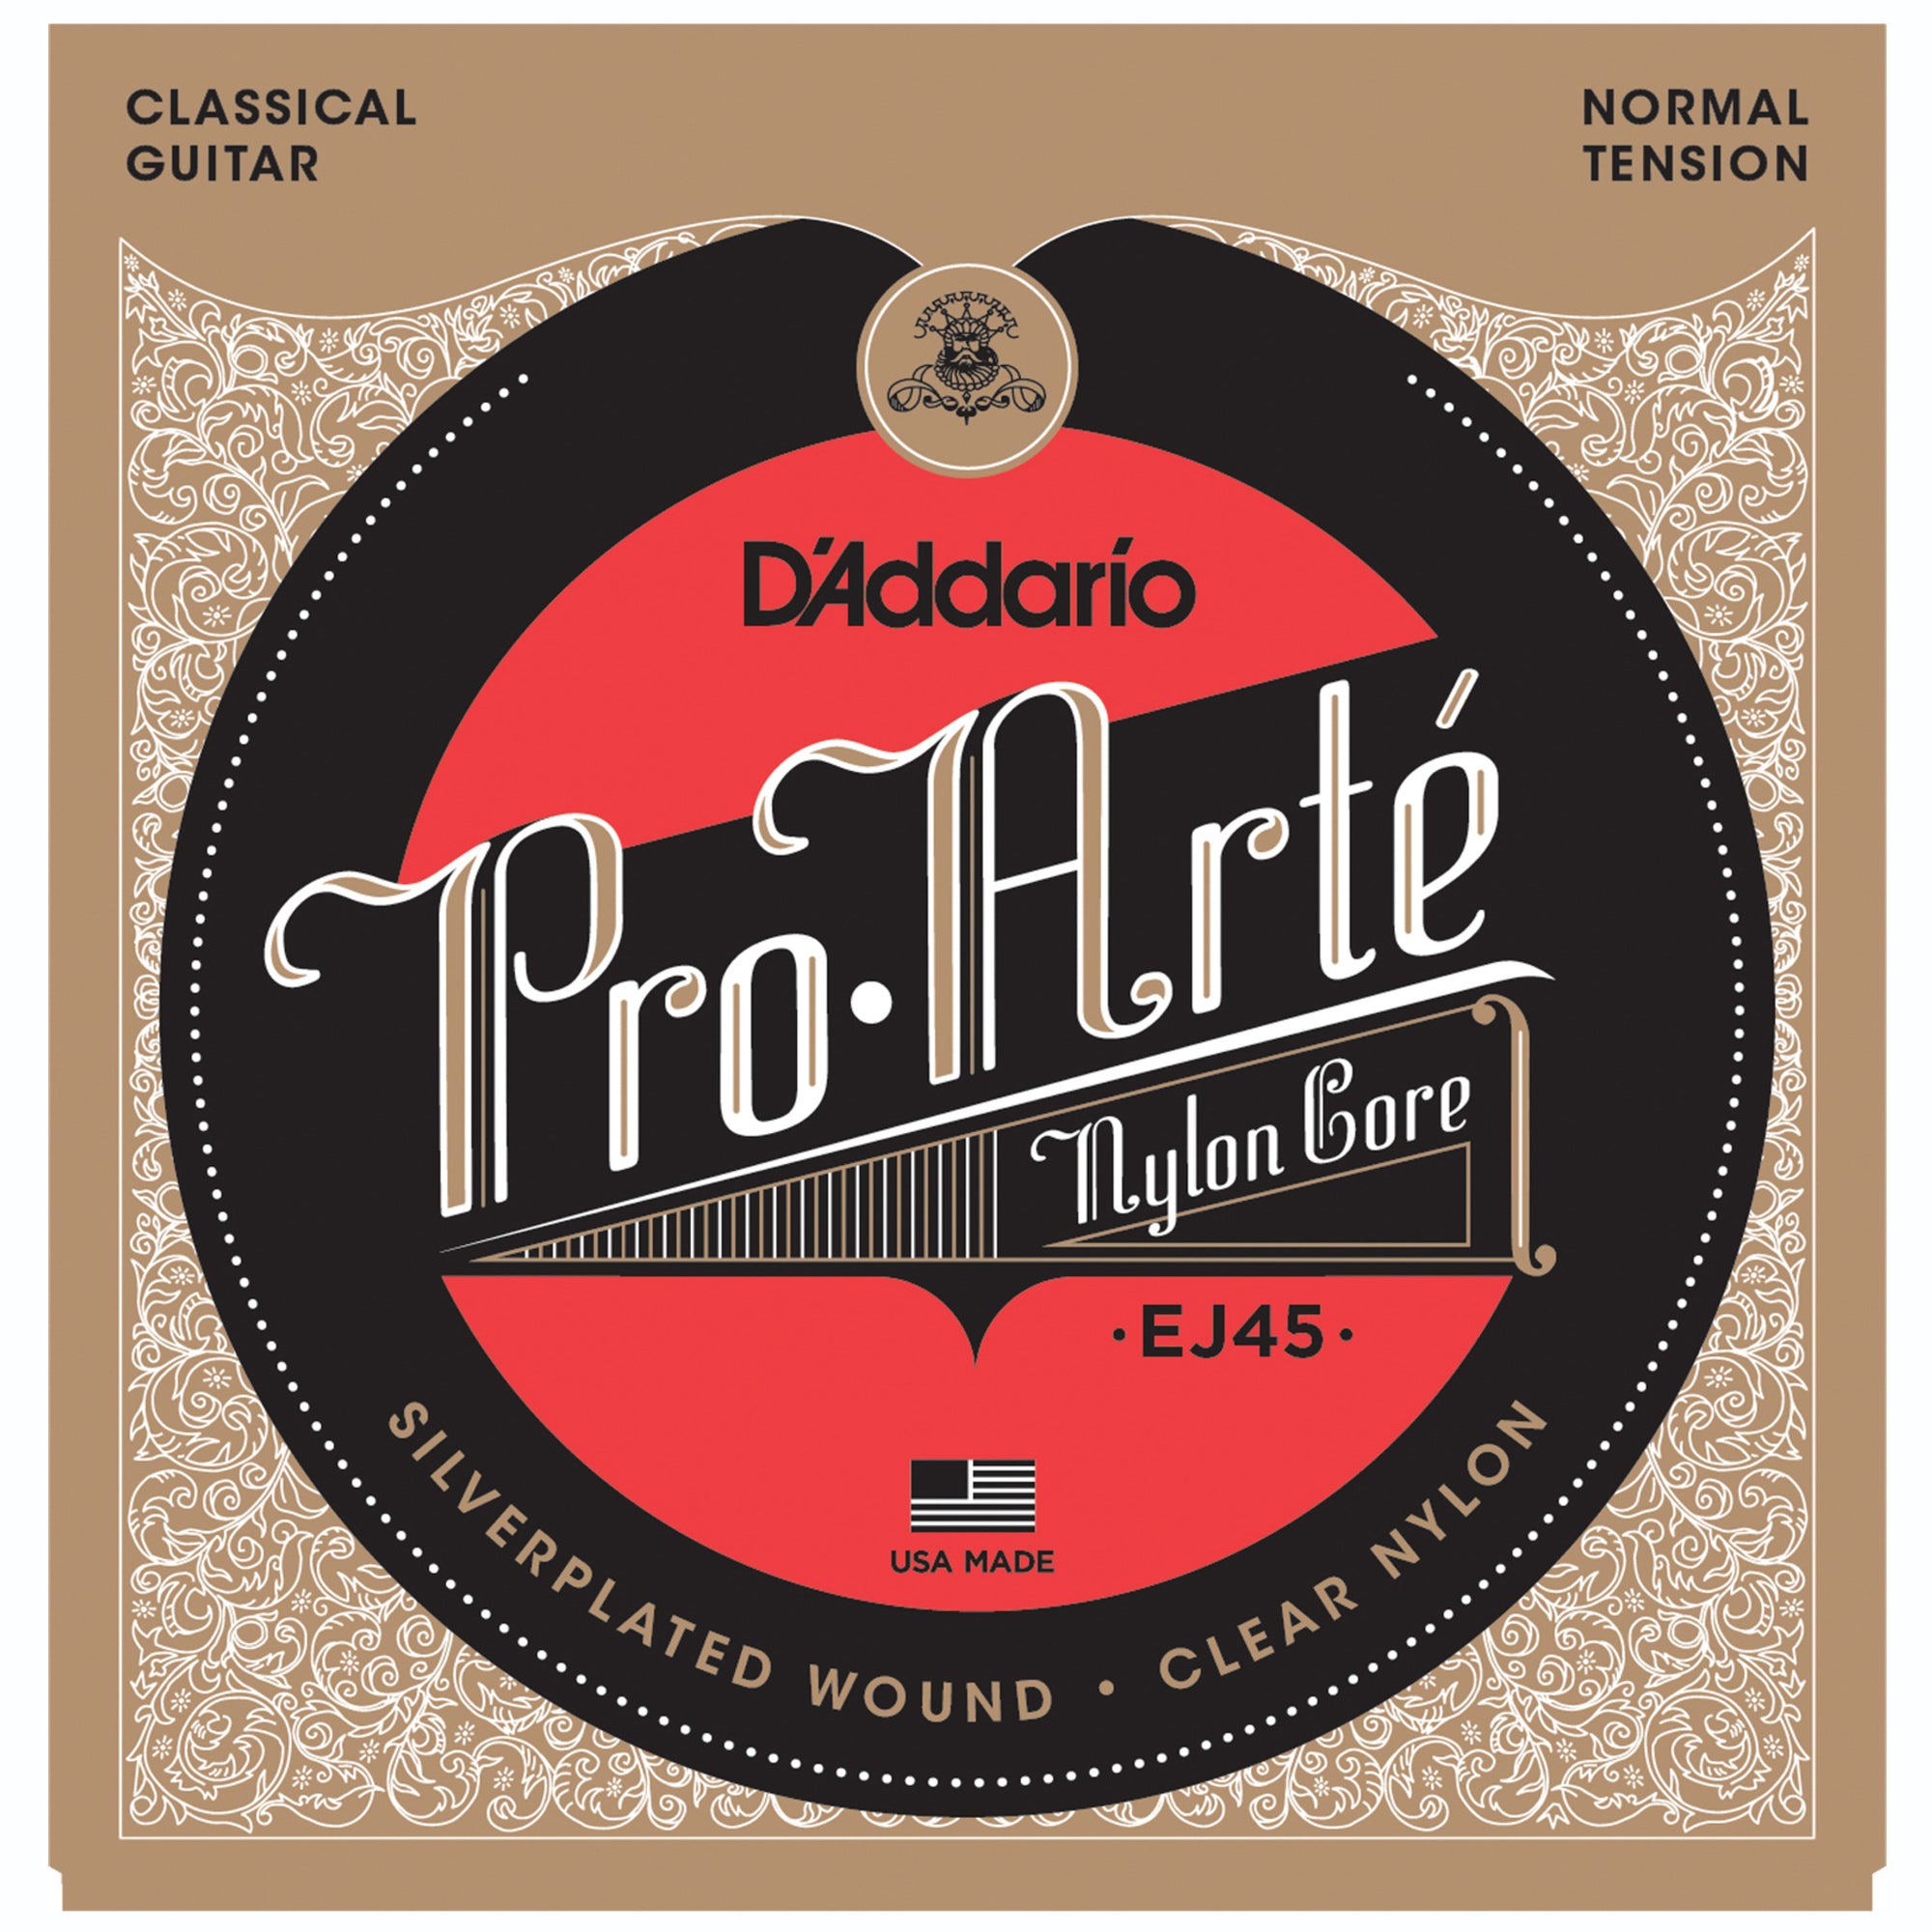 D'Addario EJ45 Pro Arte Normal Classical Guitar Strings